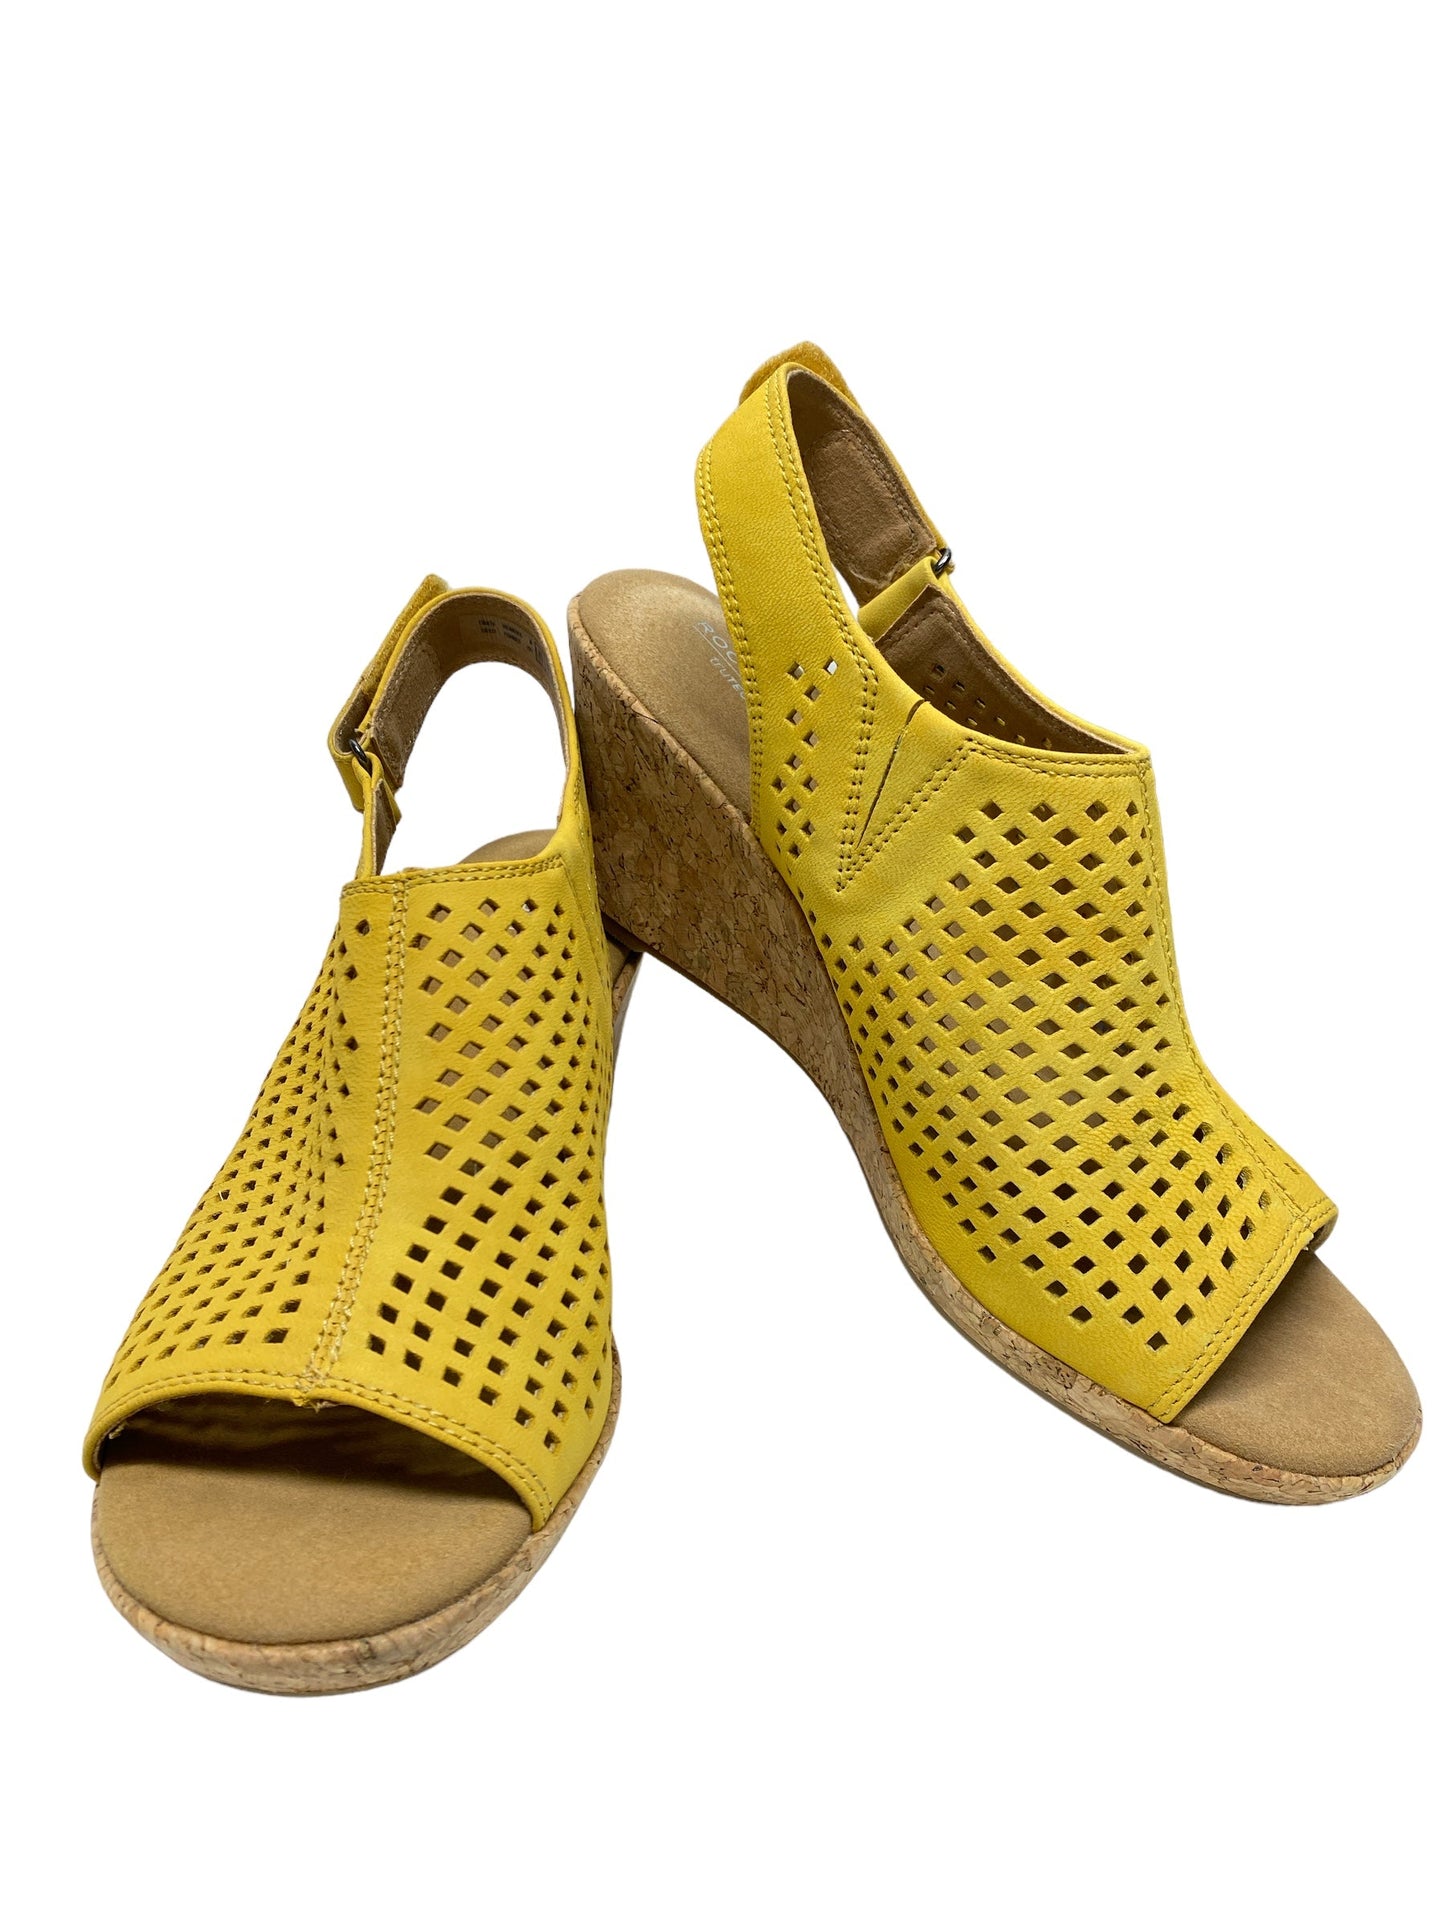 Yellow Shoes Heels Wedge Rockport, Size 8.5